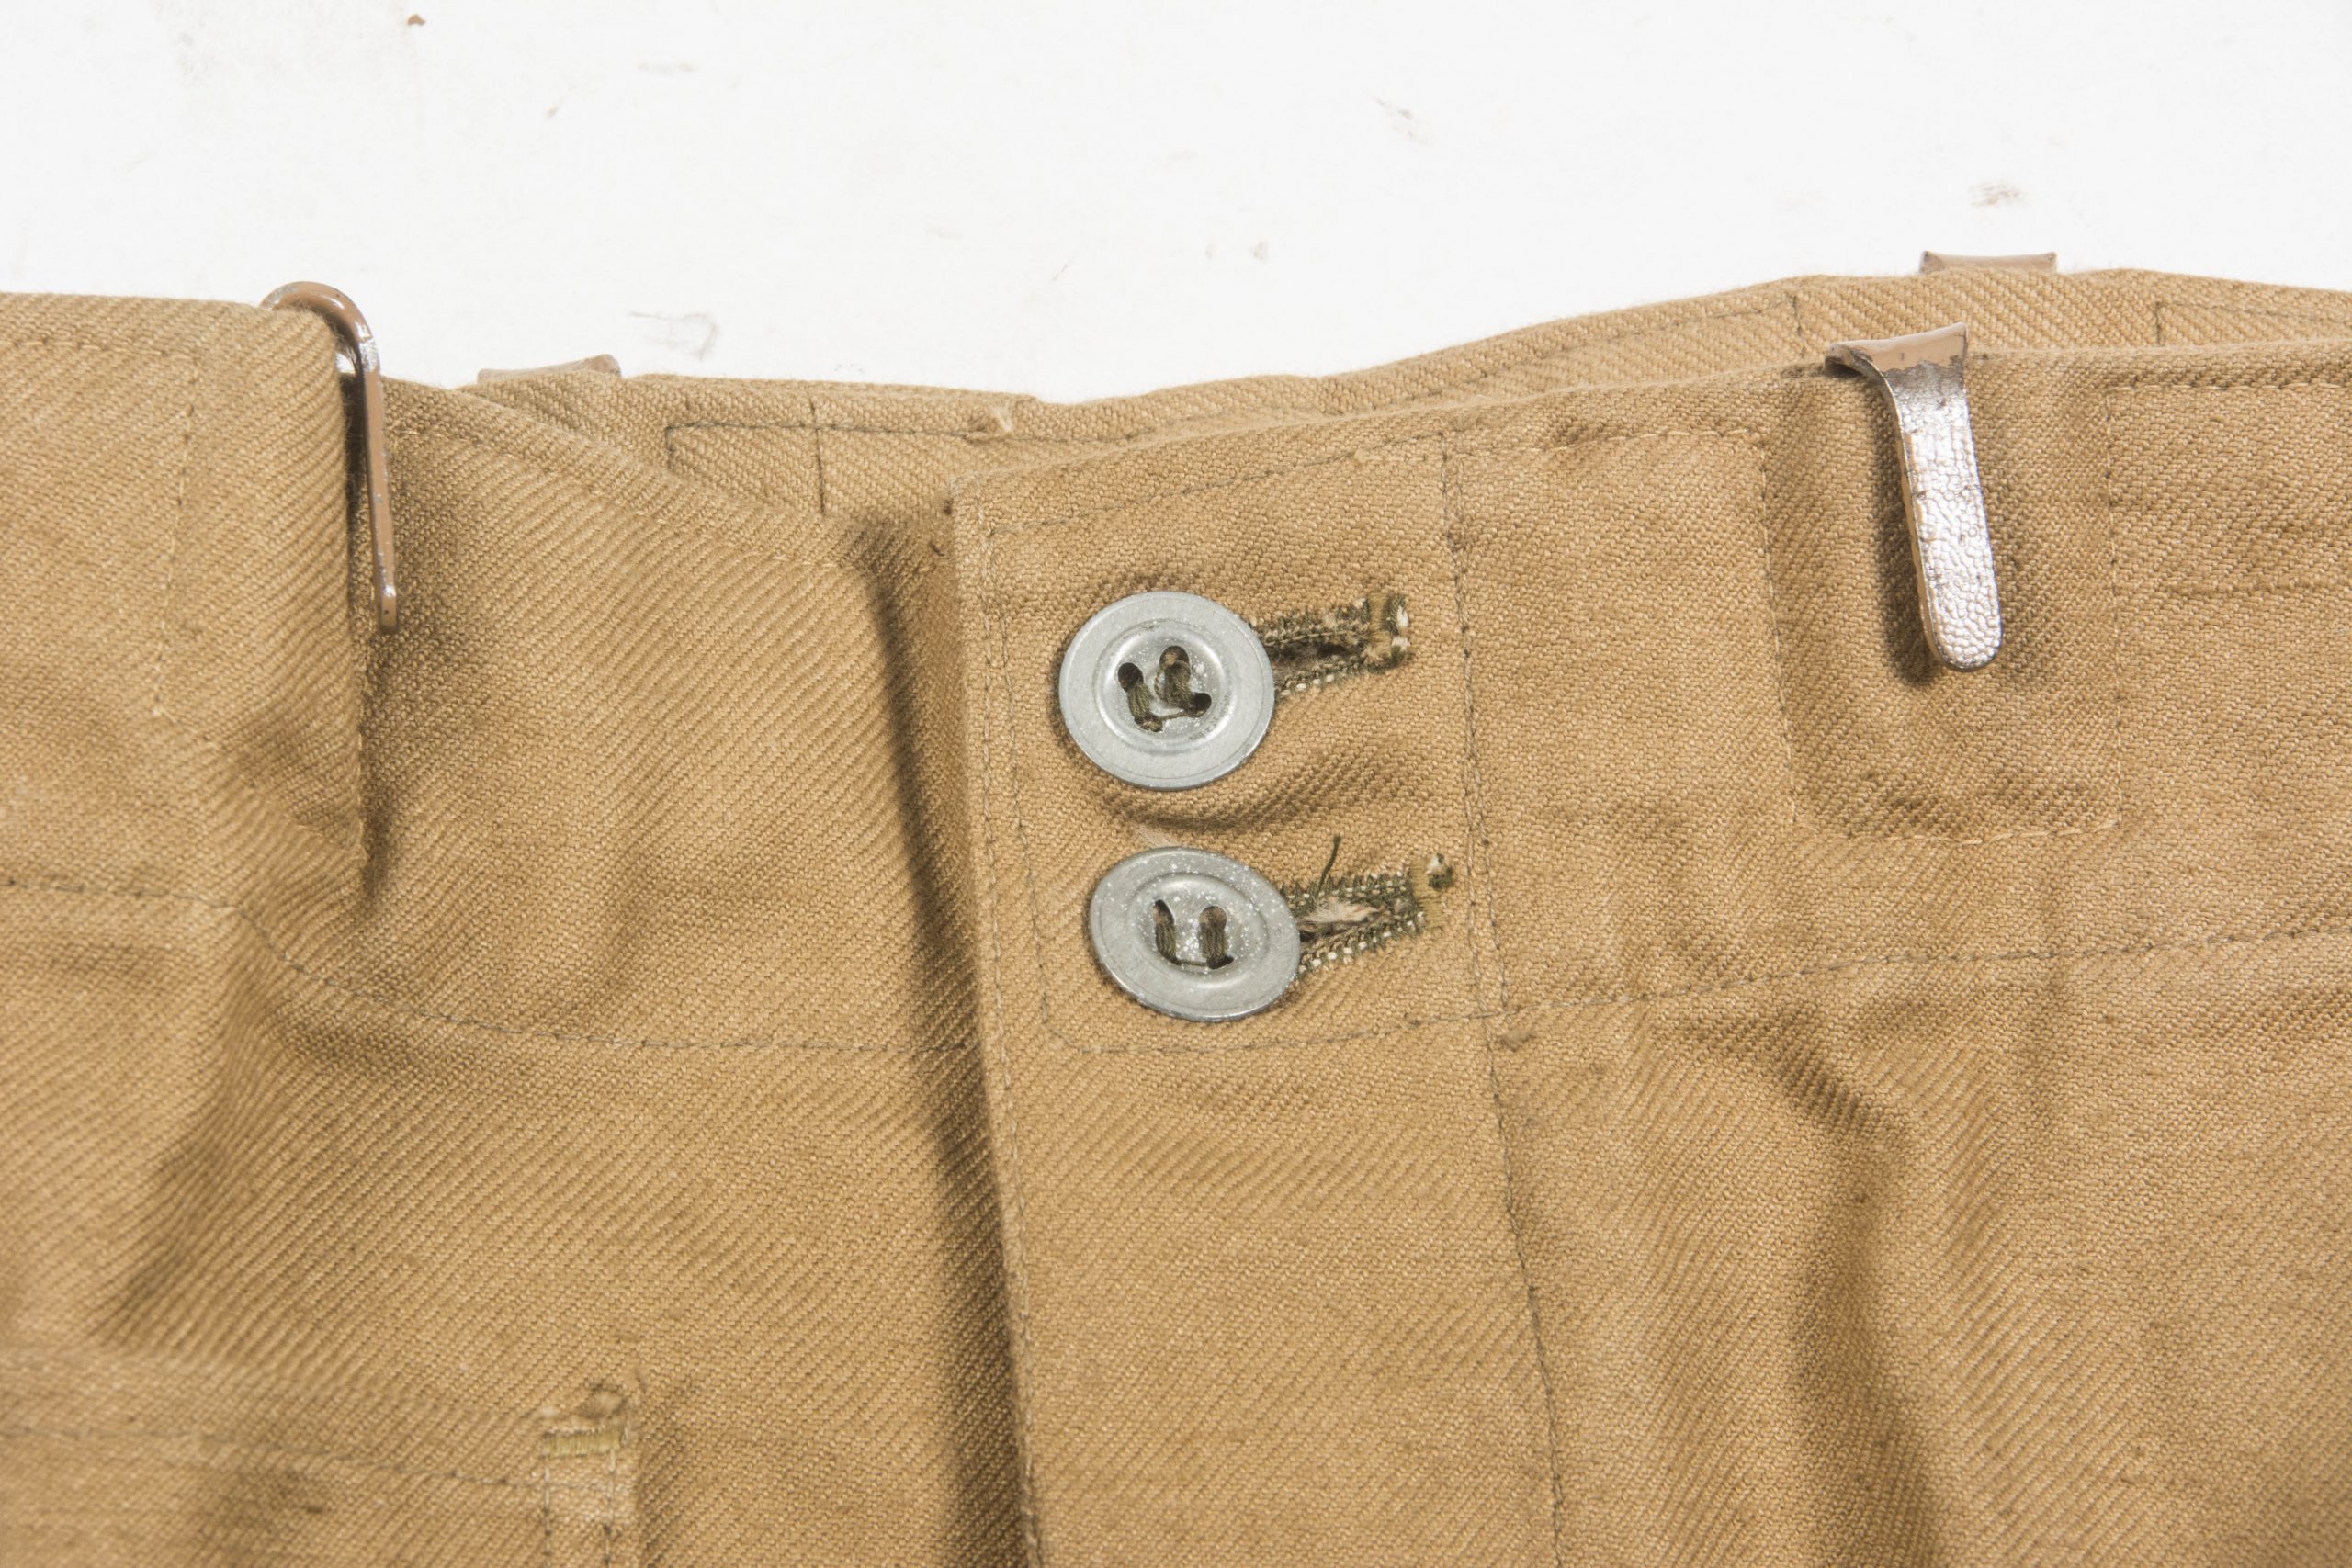 Rare Waffen-SS Sahariana trousers – fjm44